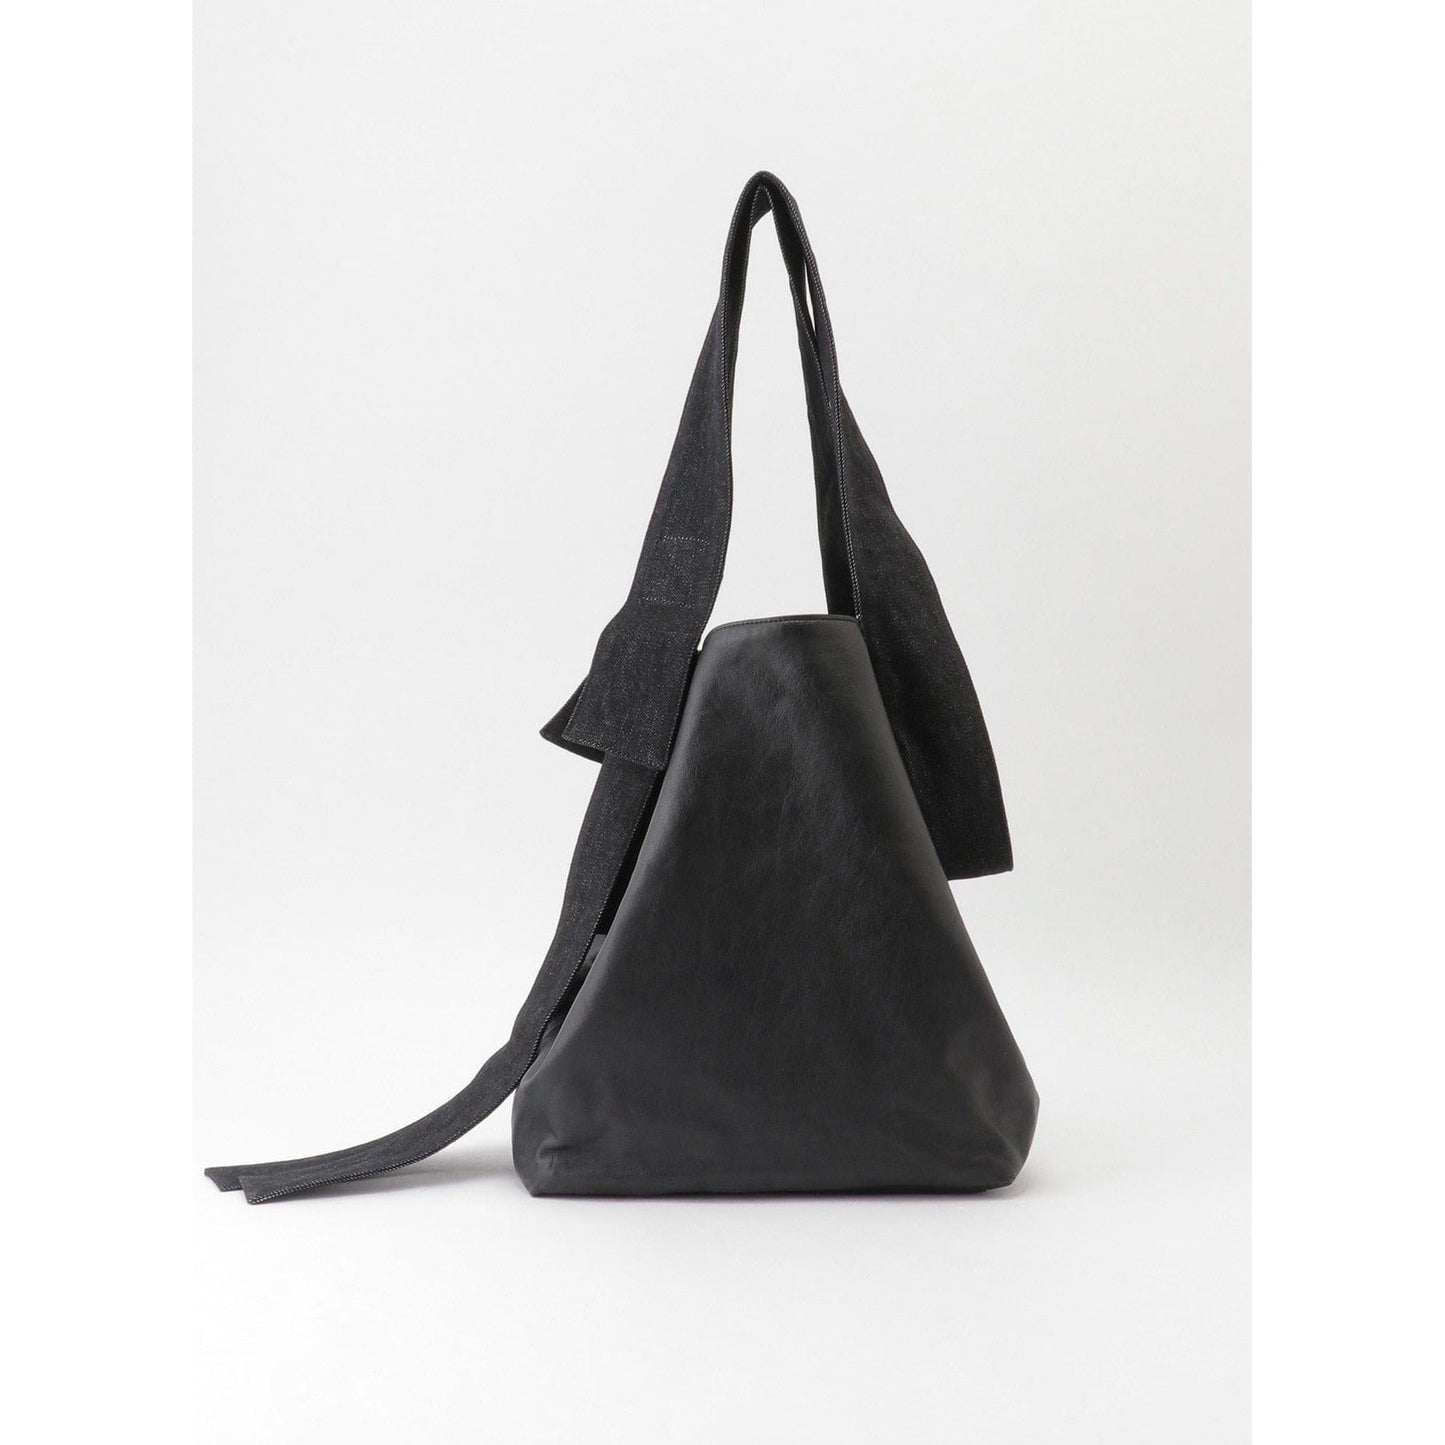 Yohji Yamamoto Handbags Black / Cow Leather / 30cm x 27cm x 11cm Yohji Yamamoto Belt Tote Bag